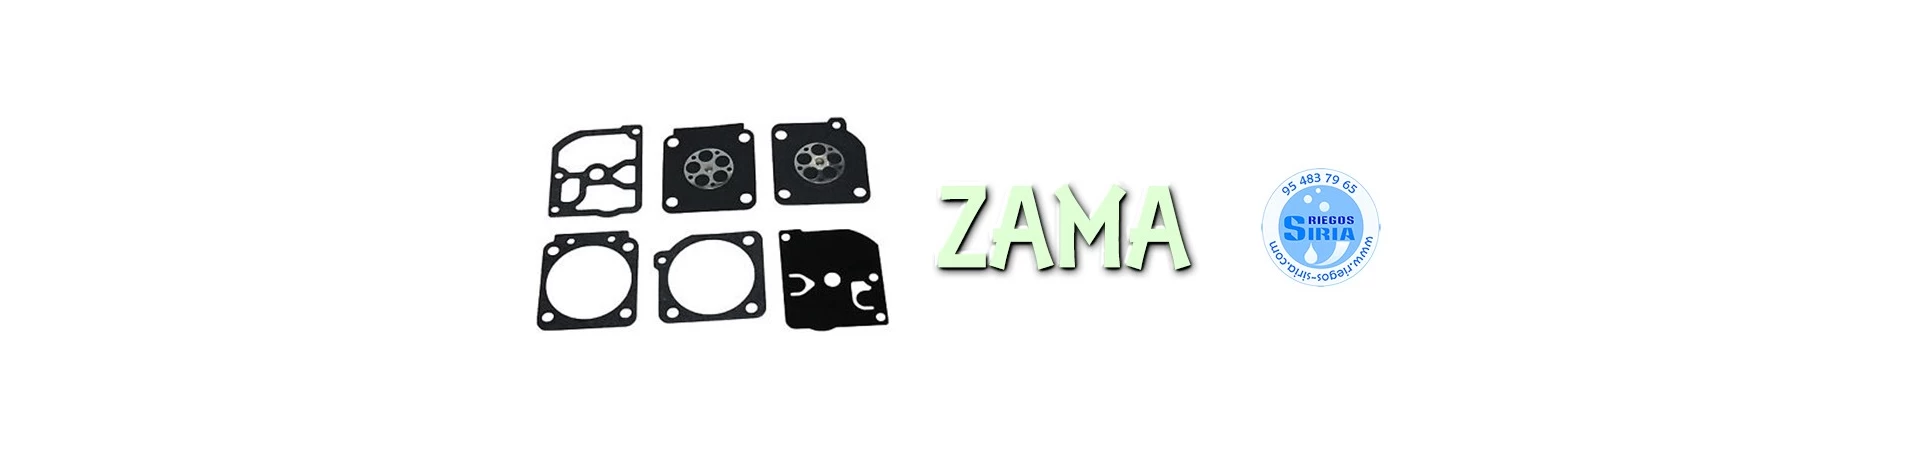 Kit Reparación Zama